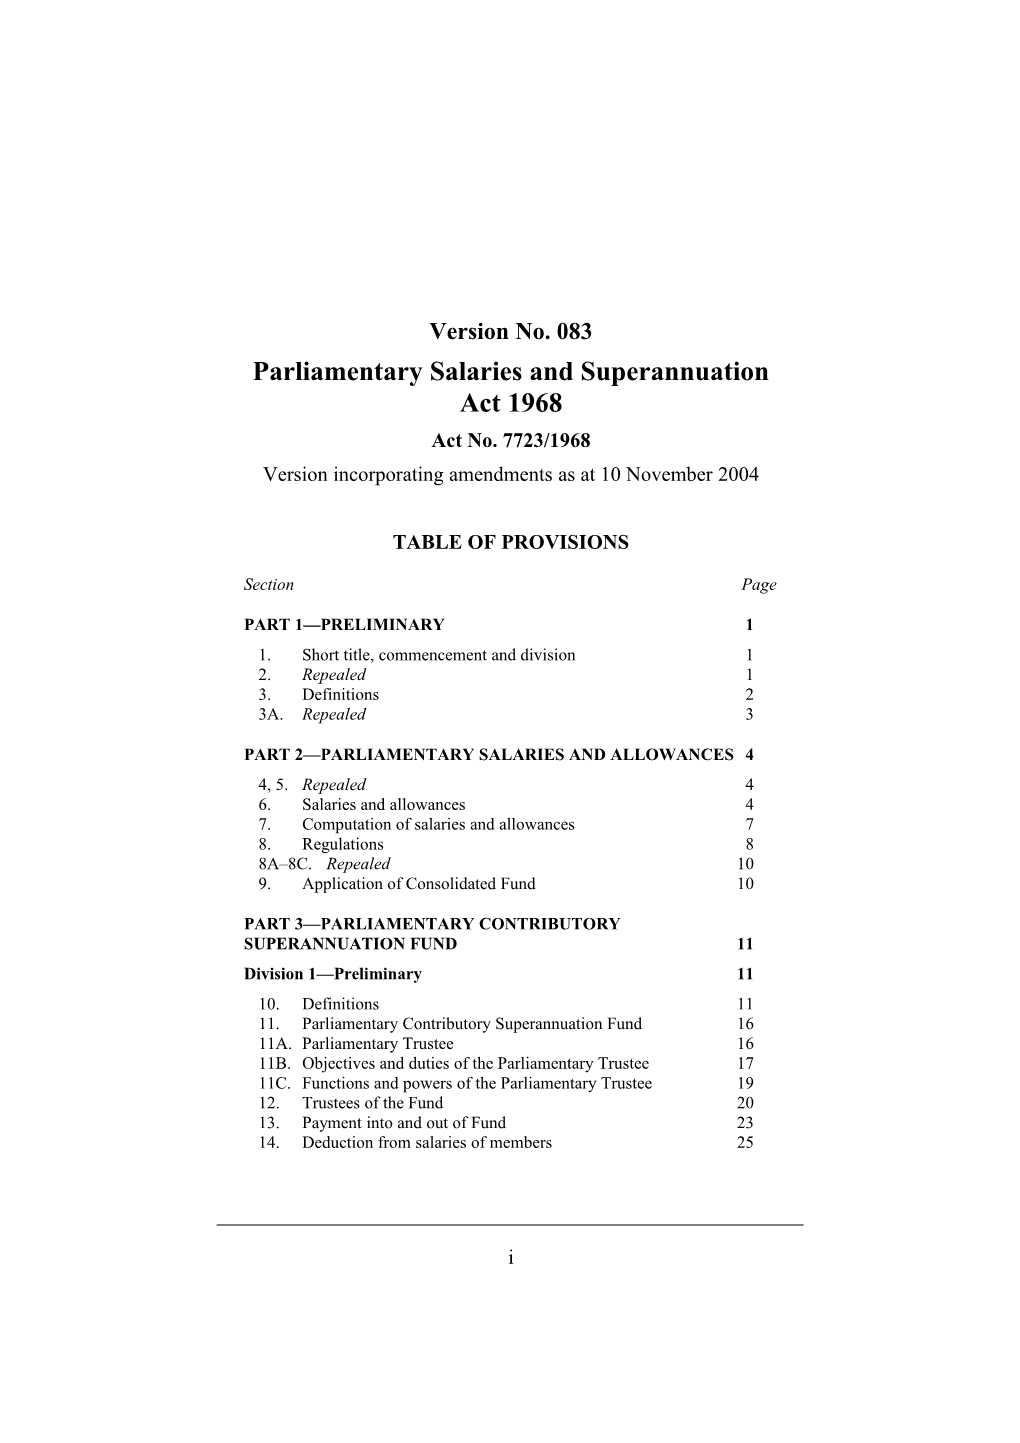 Parliamentary Salaries and Superannuation Act 1968